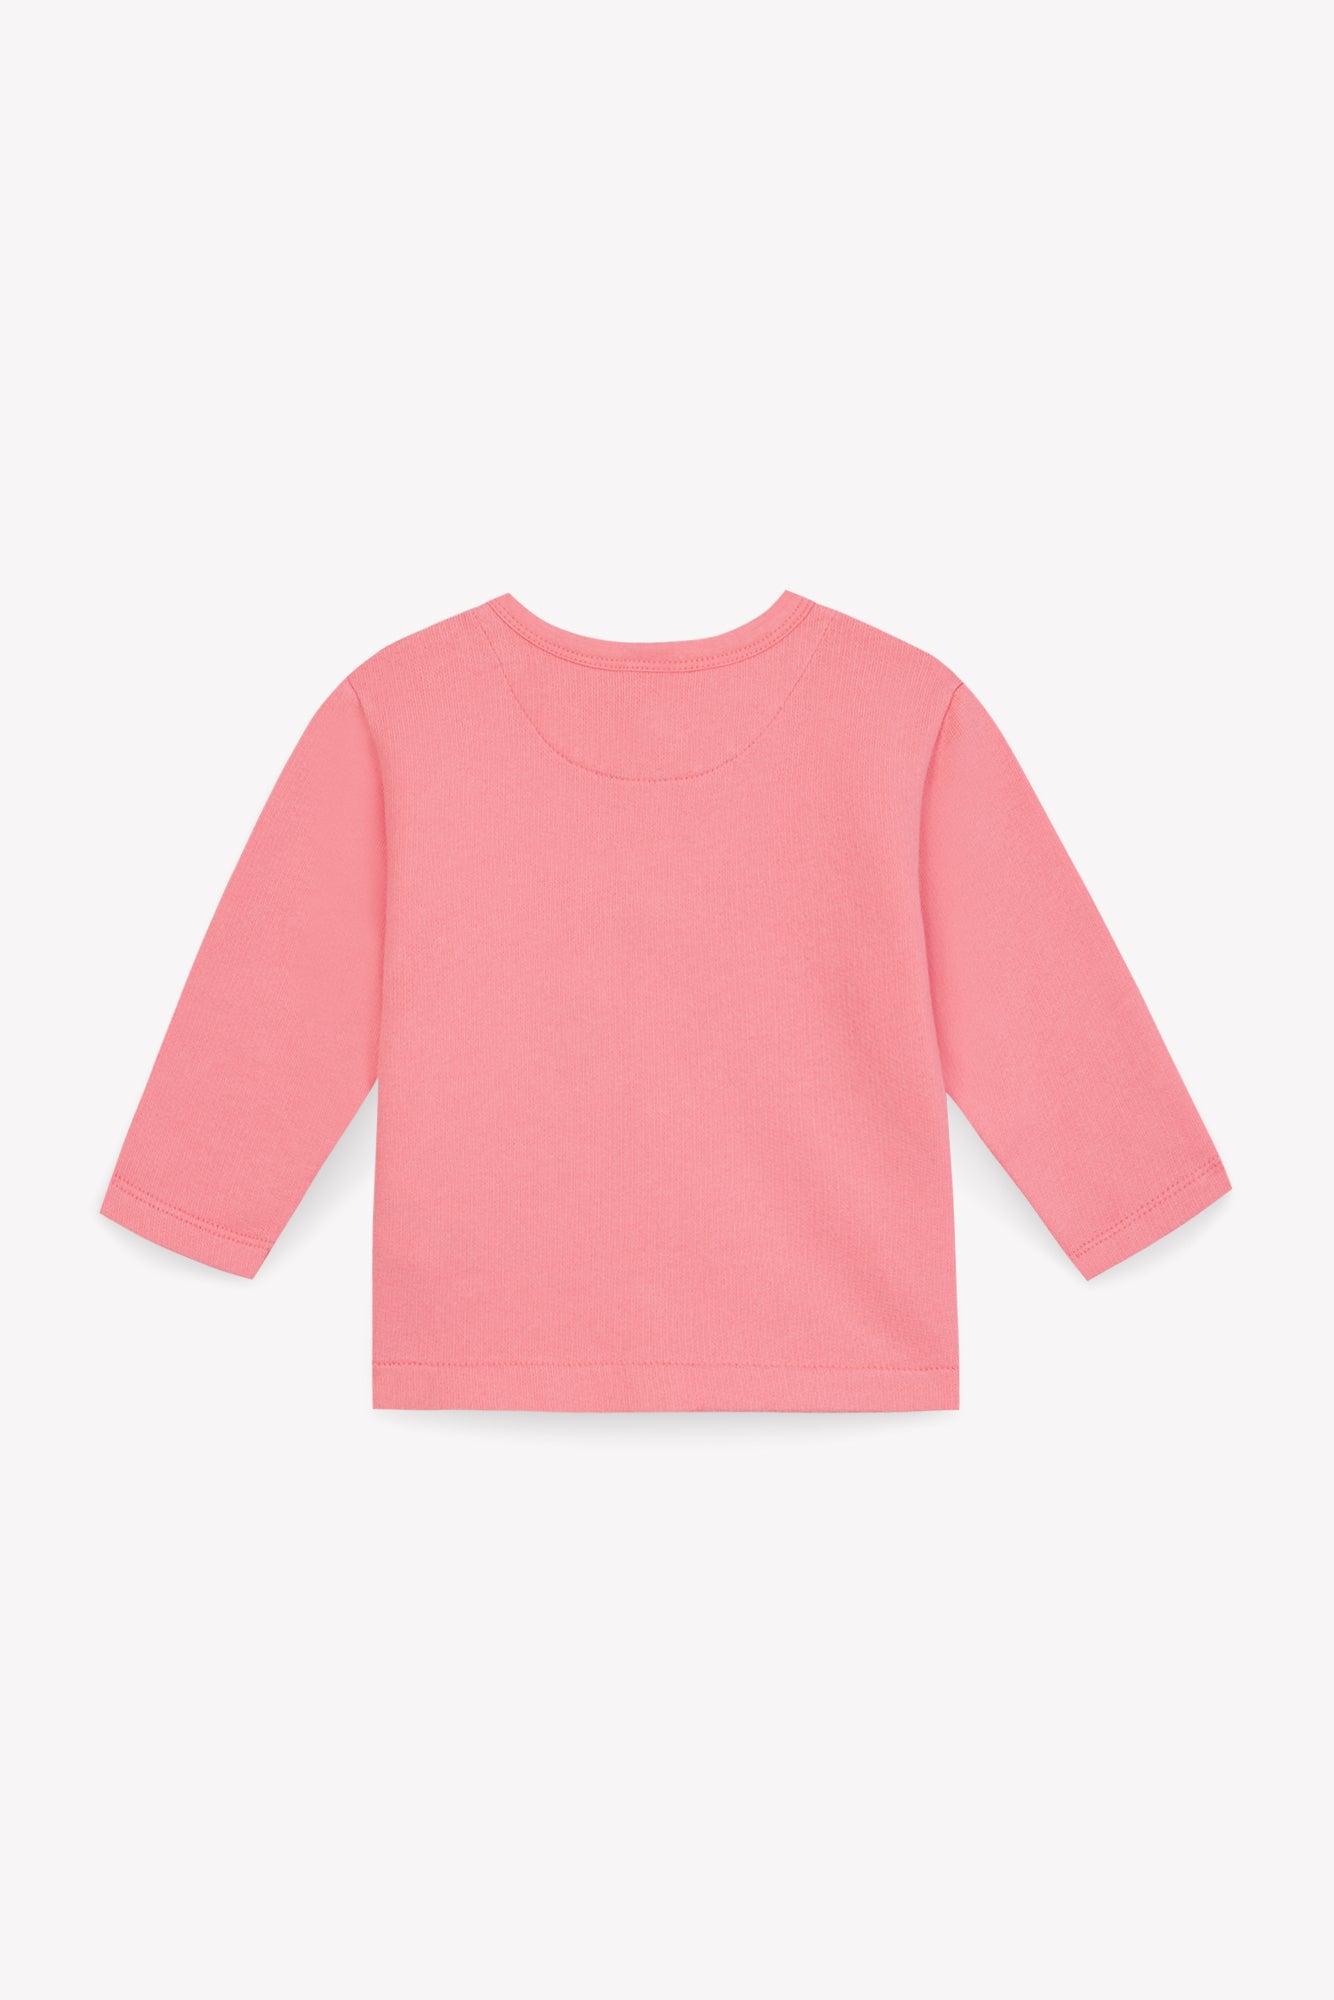 Cardigan - Sister Pink Baby organic cotton